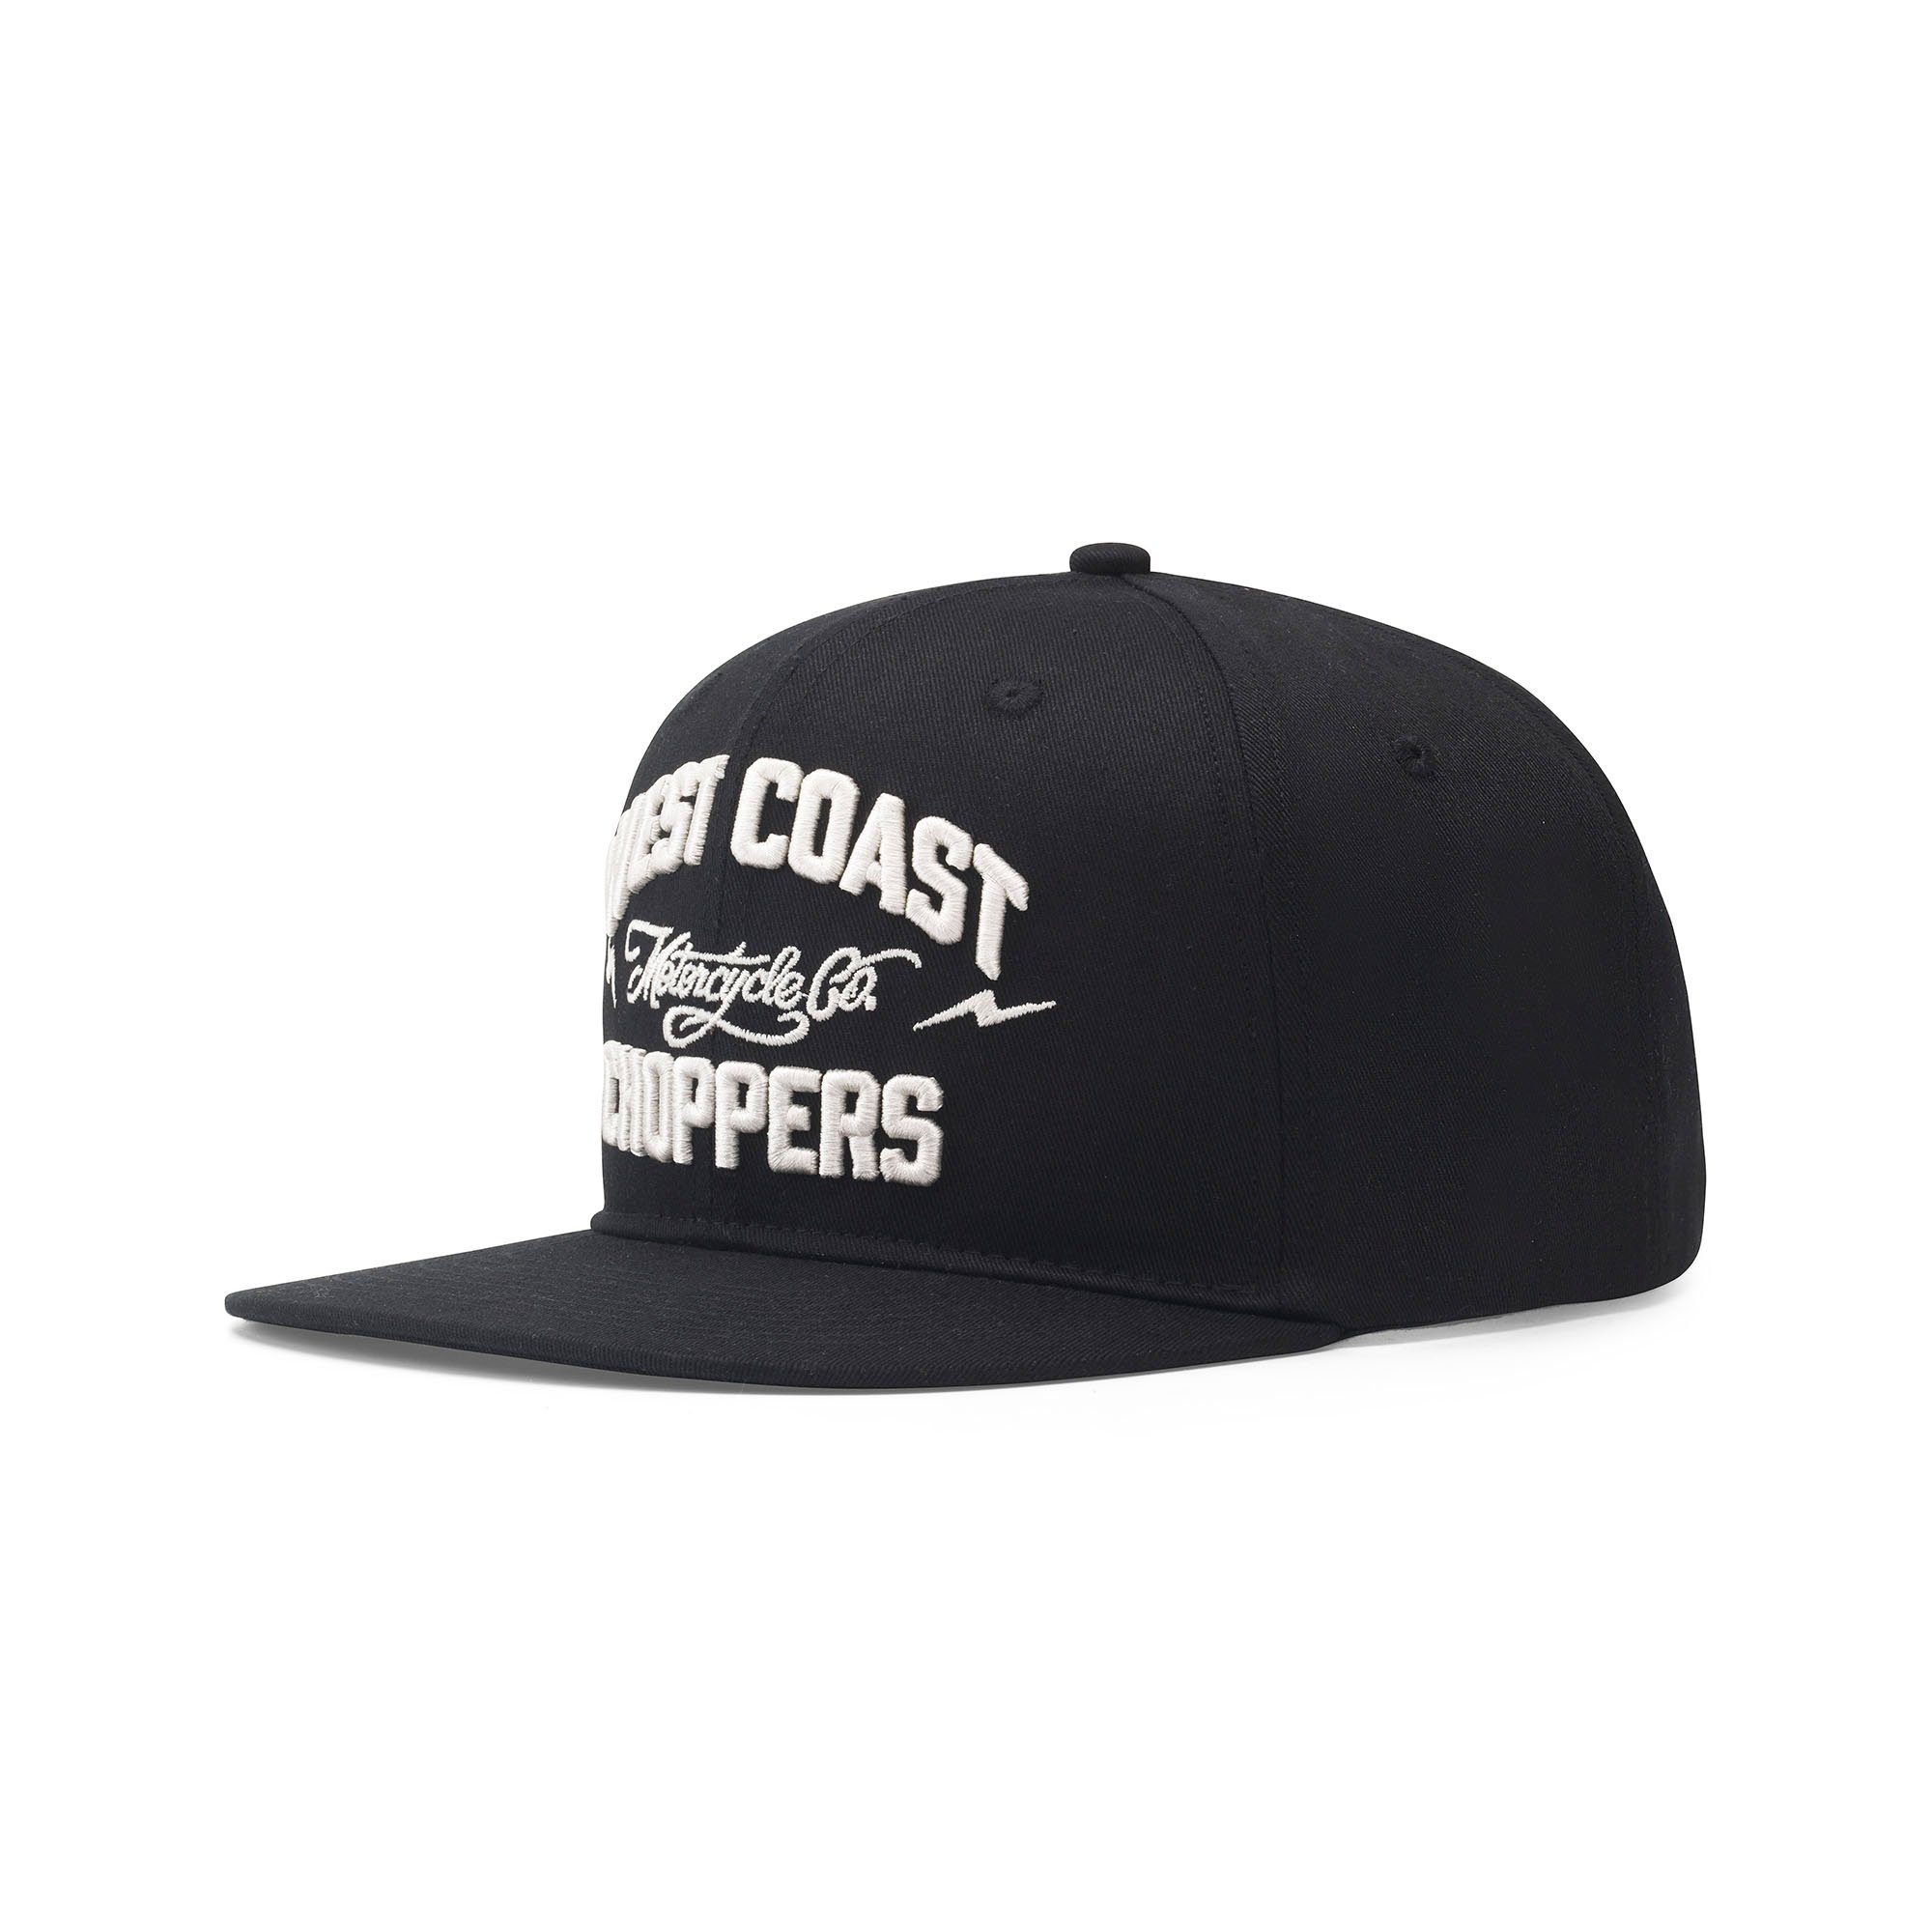 Cap Baseball Patch Choppers West Coast Choppers Co. Motorcycle West black Cap Flatbill Unisex Coast